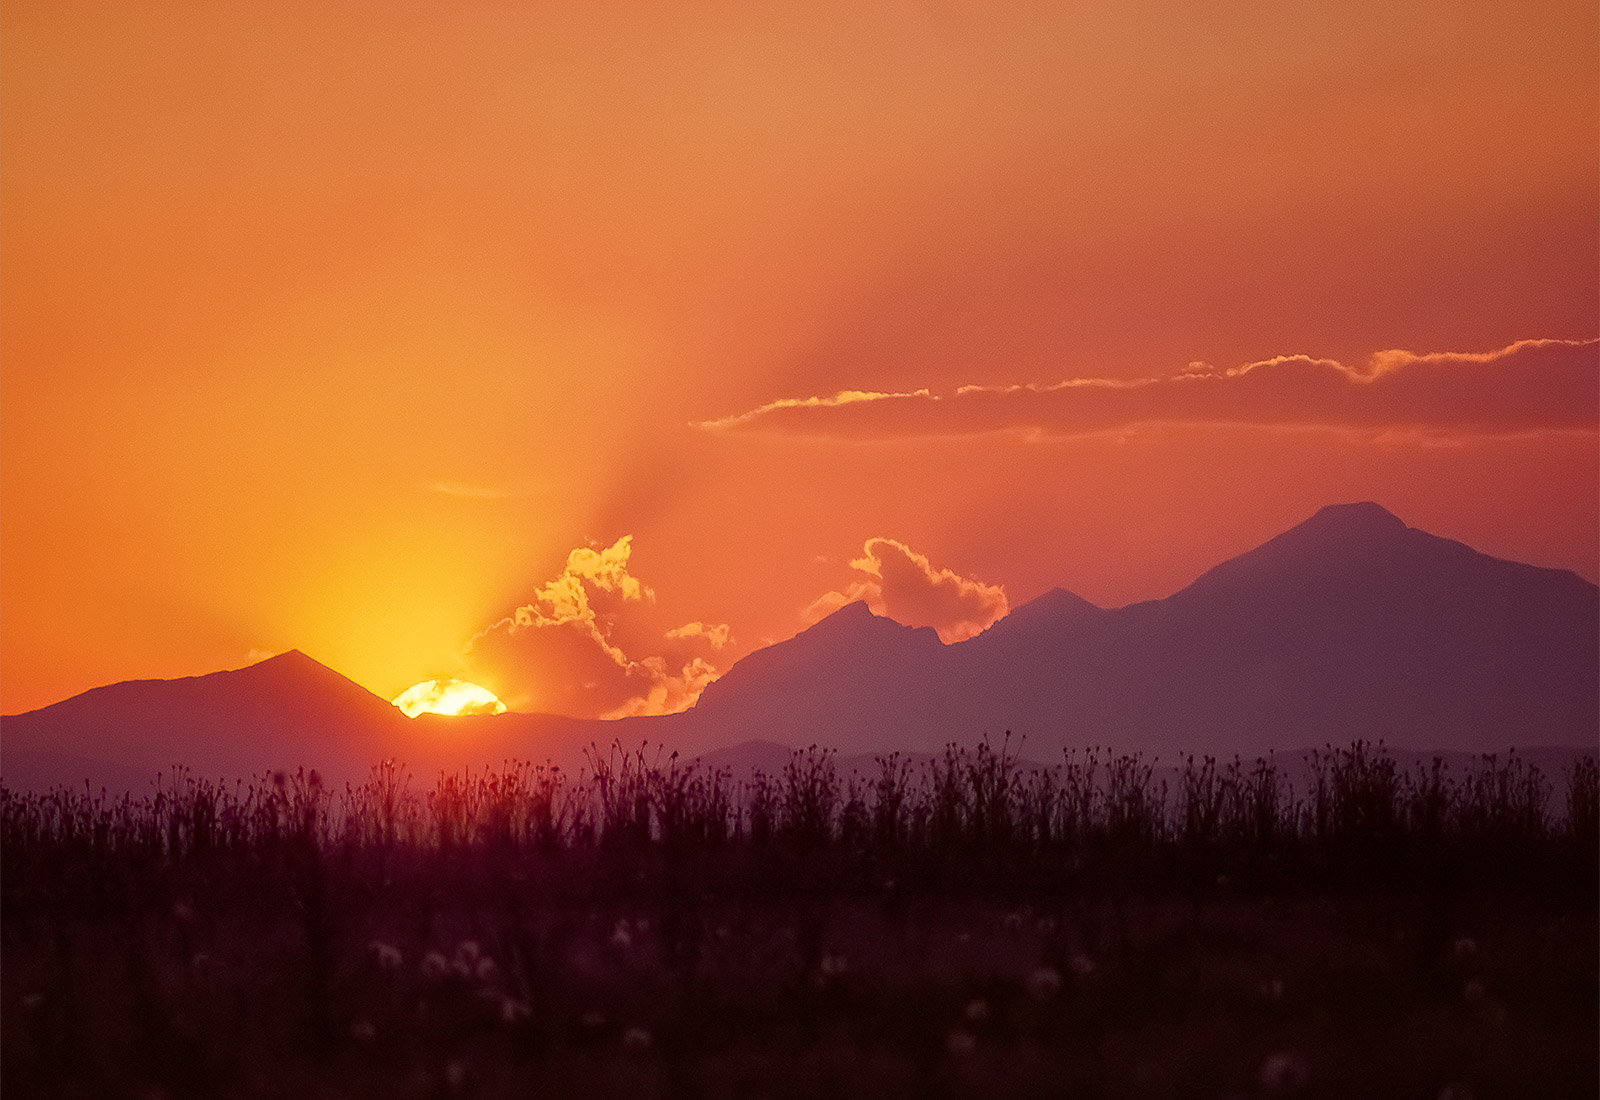 Long's Peak sunset, Colorado Rocky Mountains